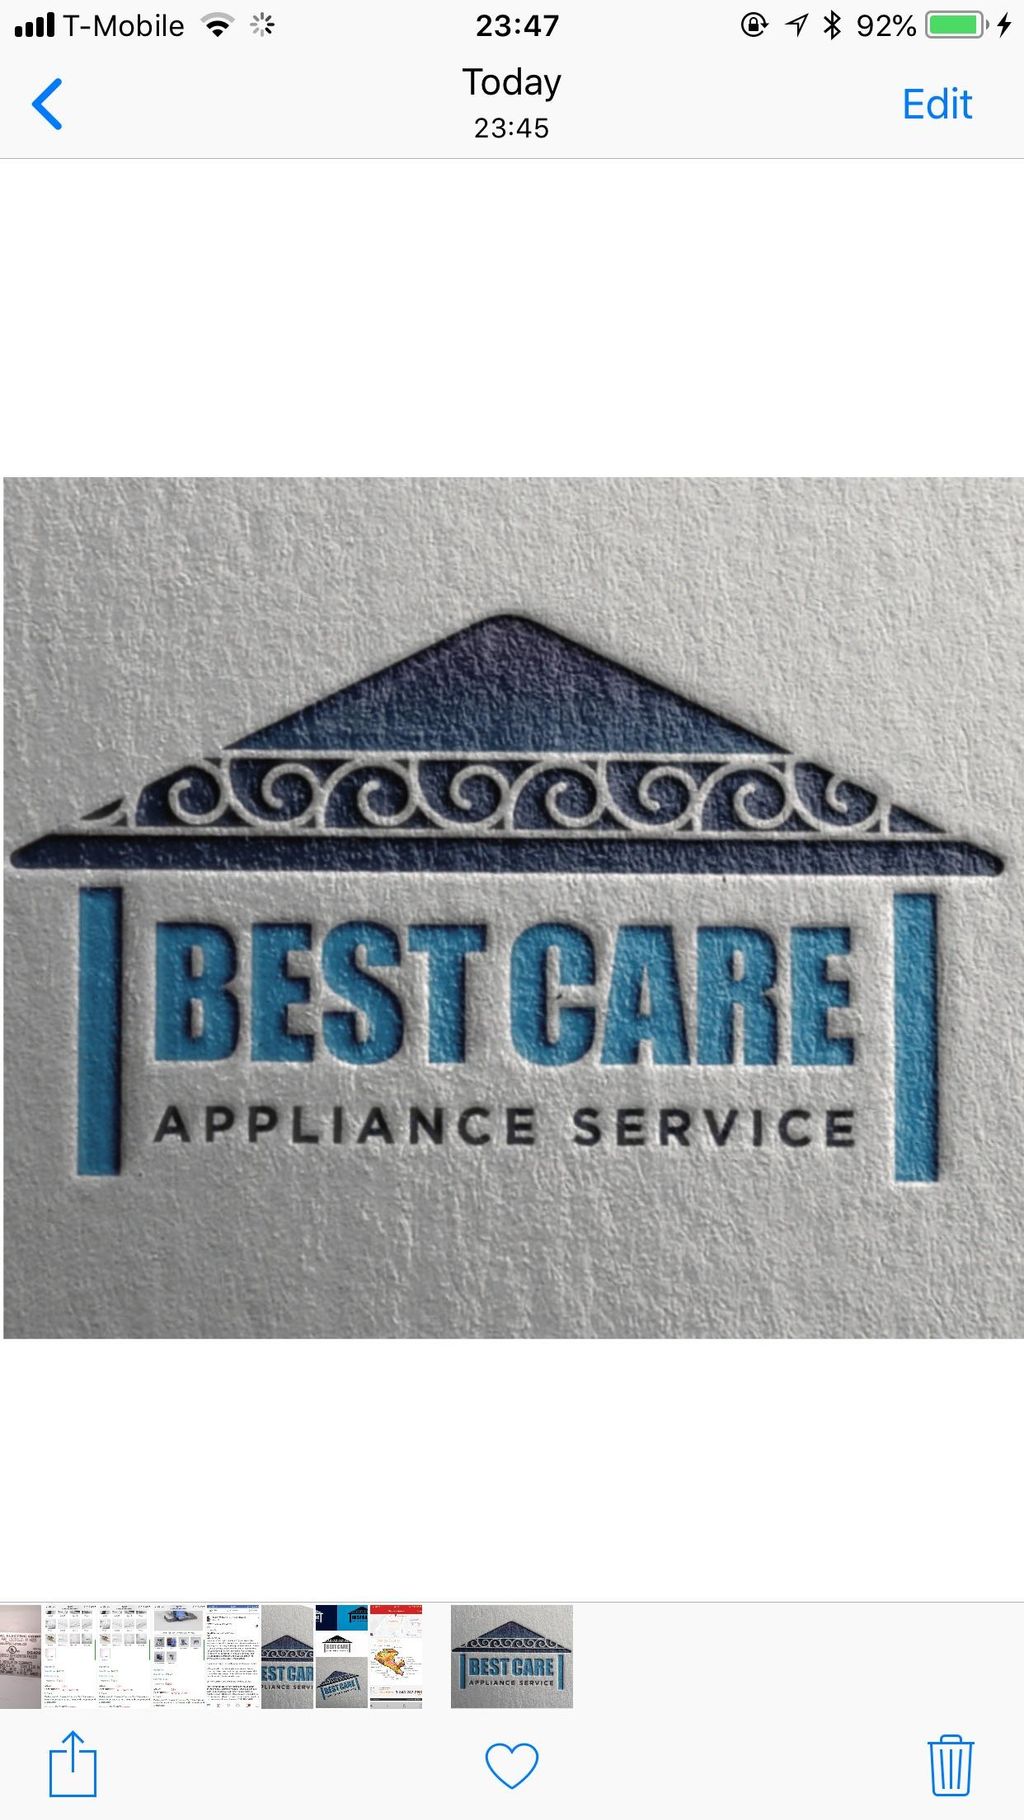 Best Care Appliance Service